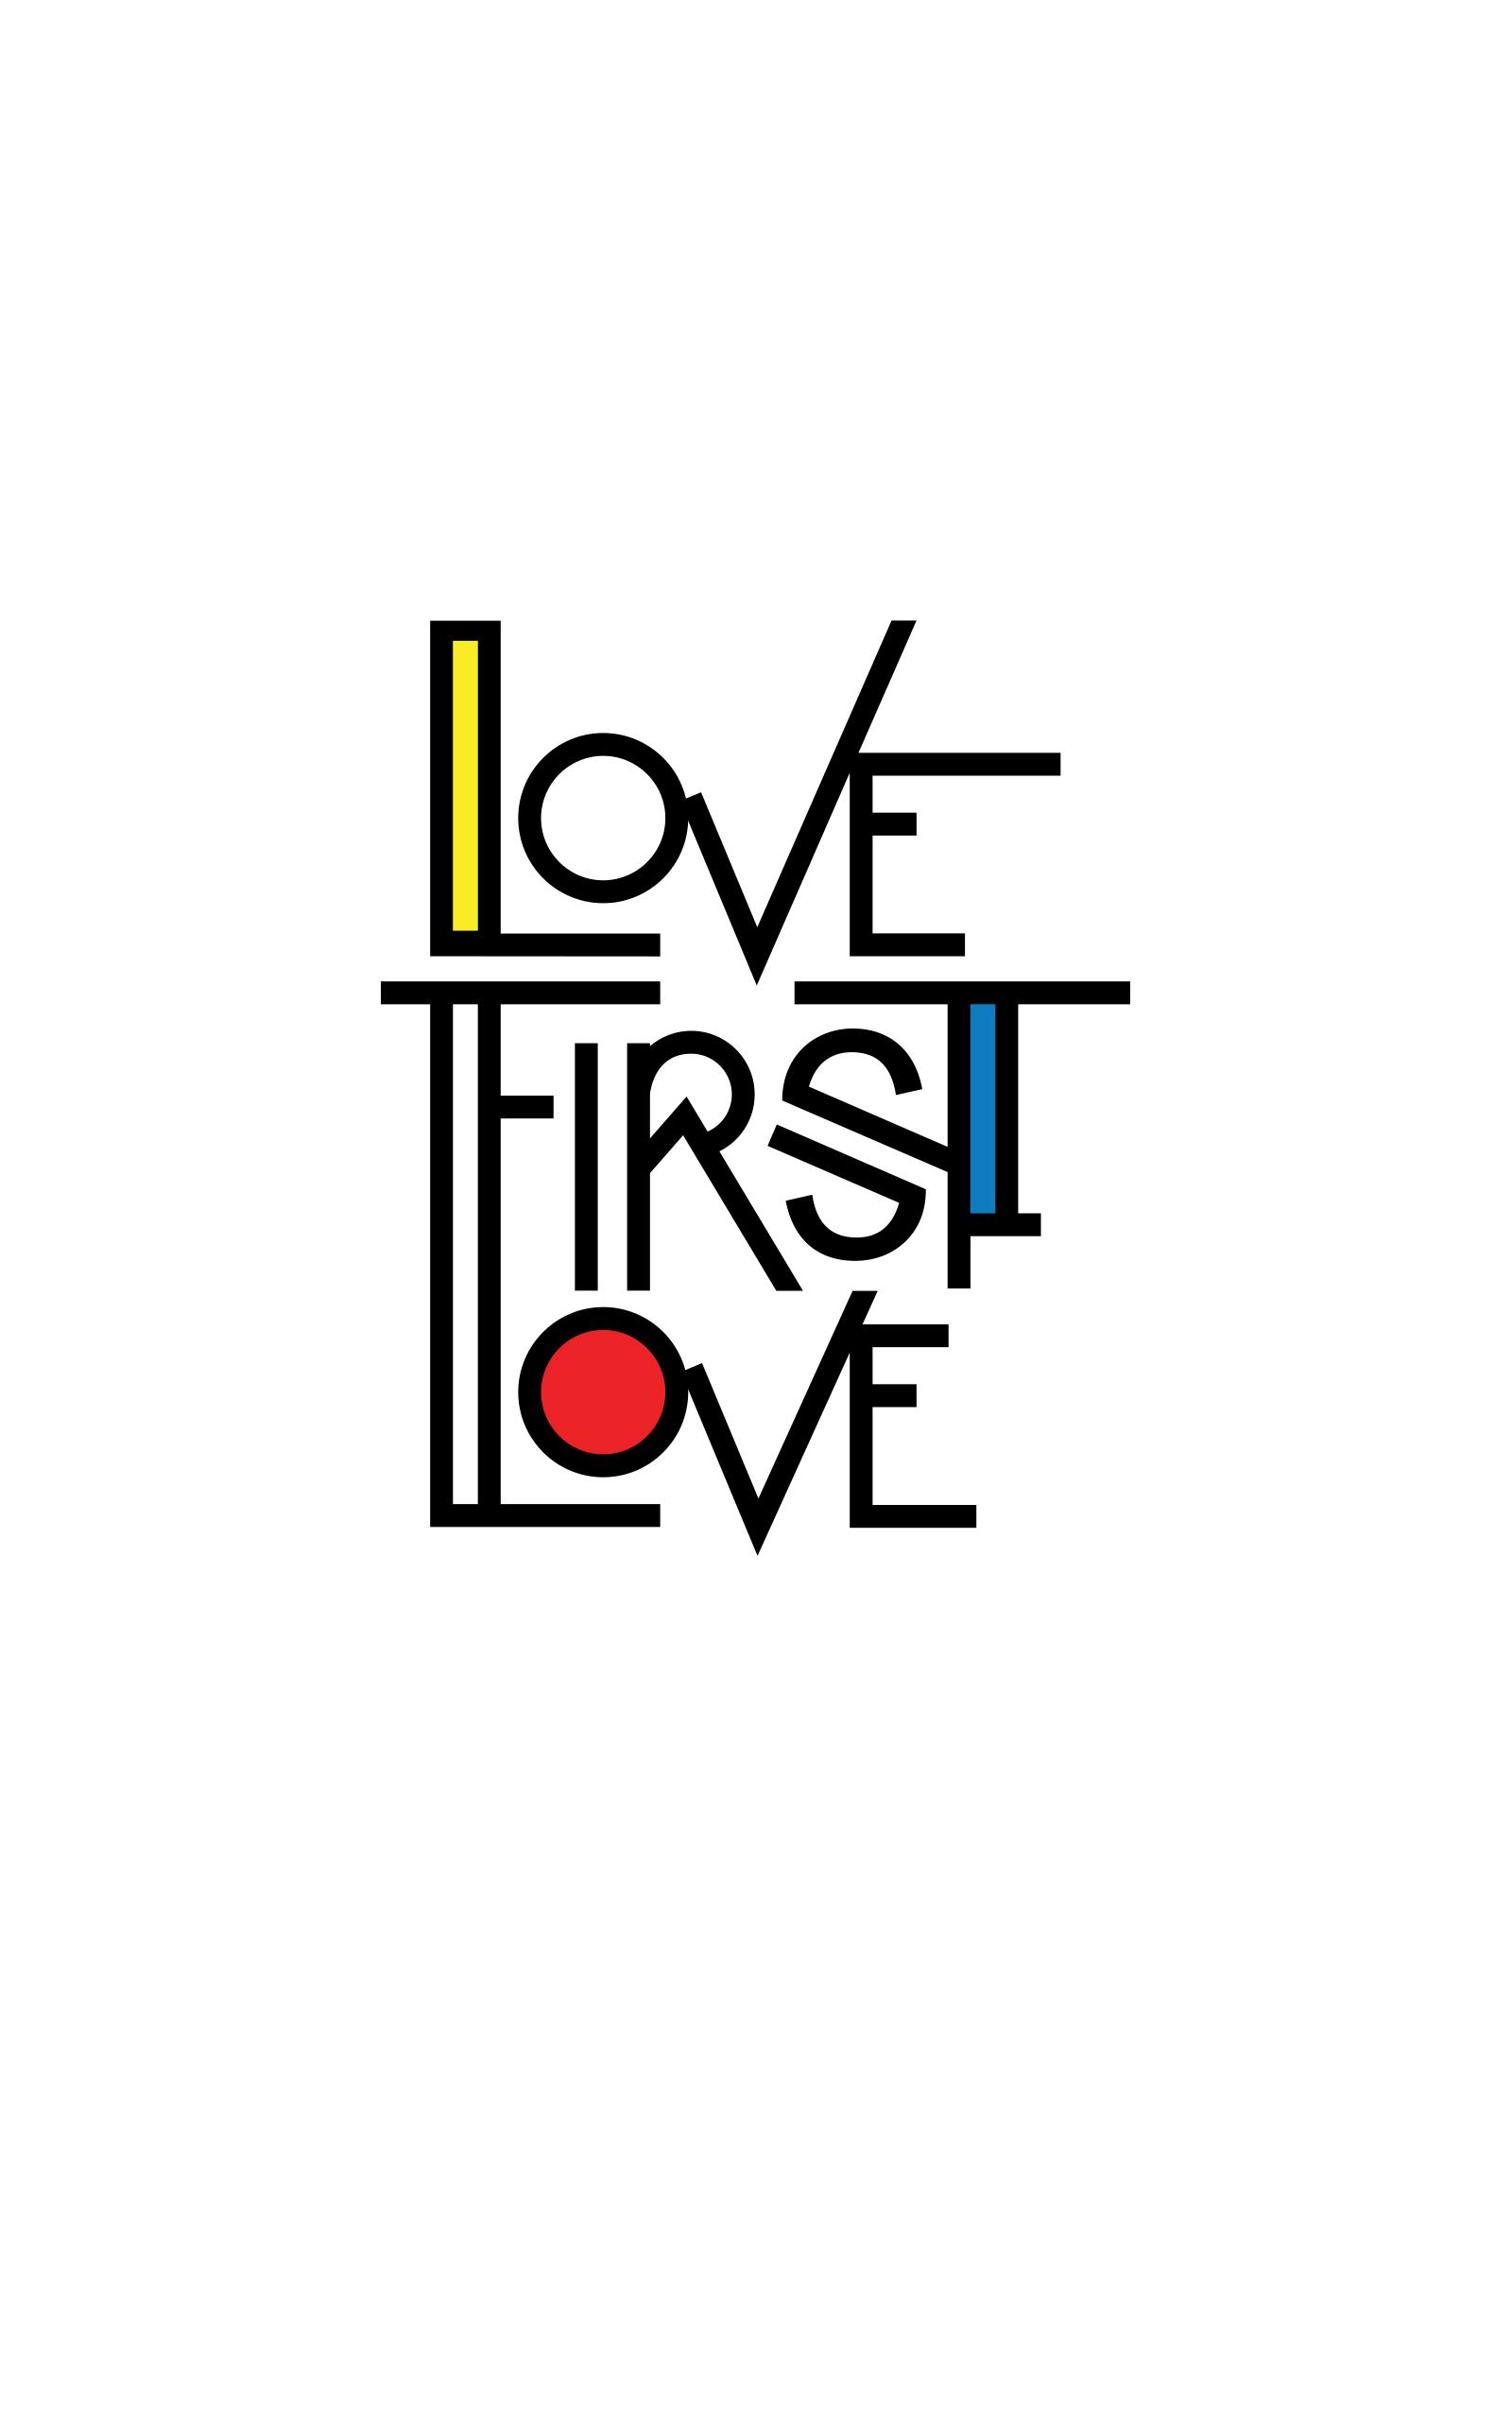 The Well Wallpaper: Love First Love